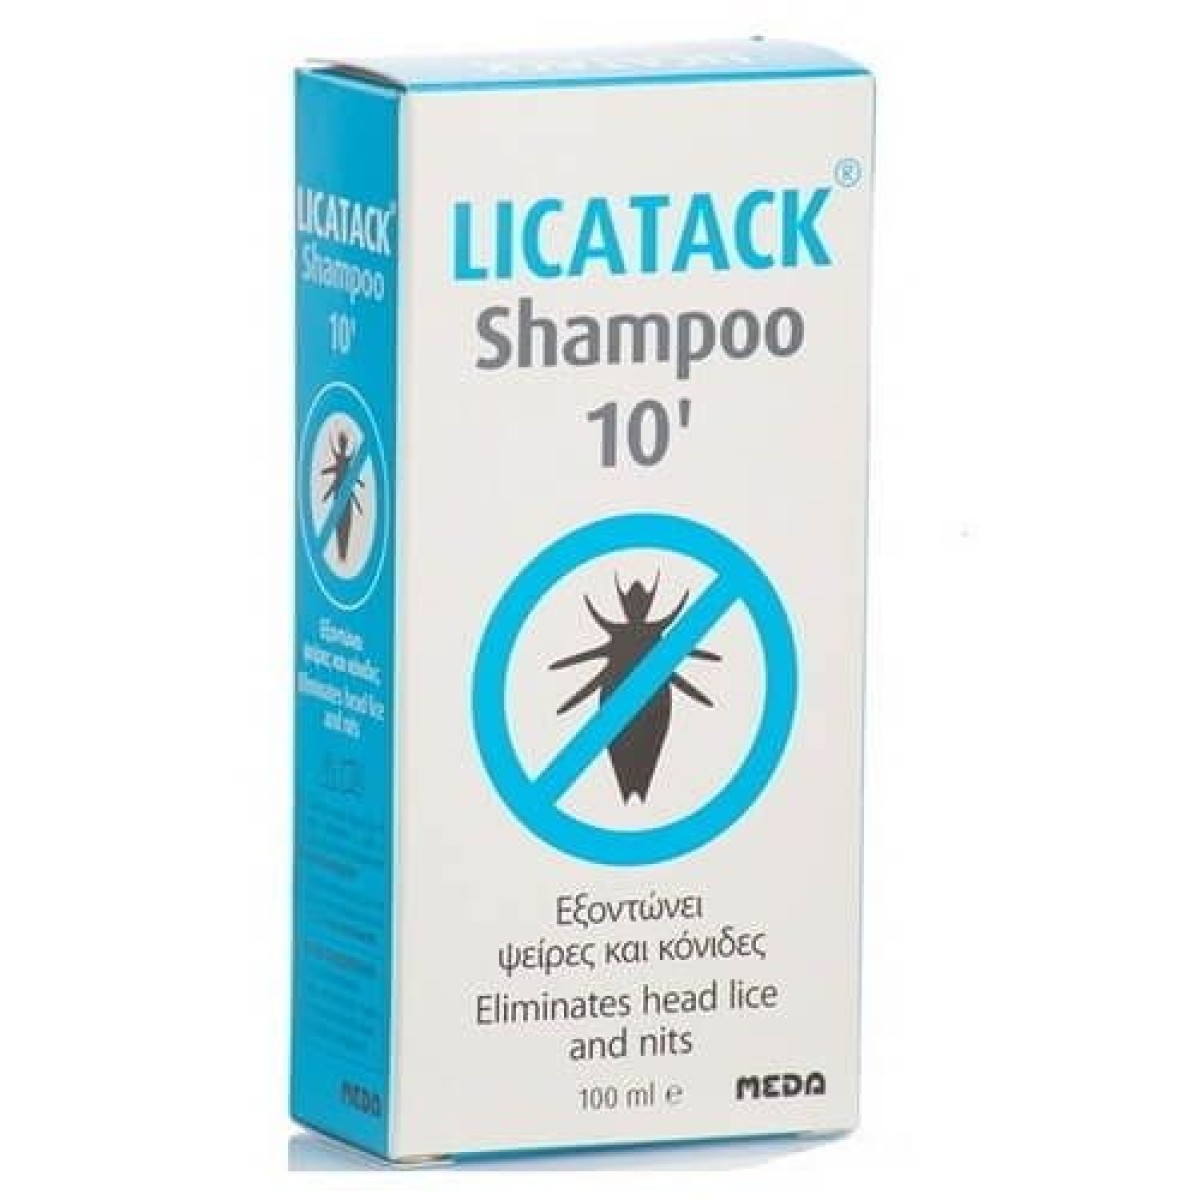 Licatack| Shampoo 10\'| Αντιφθειρικό Σαμπουάν | 100ml